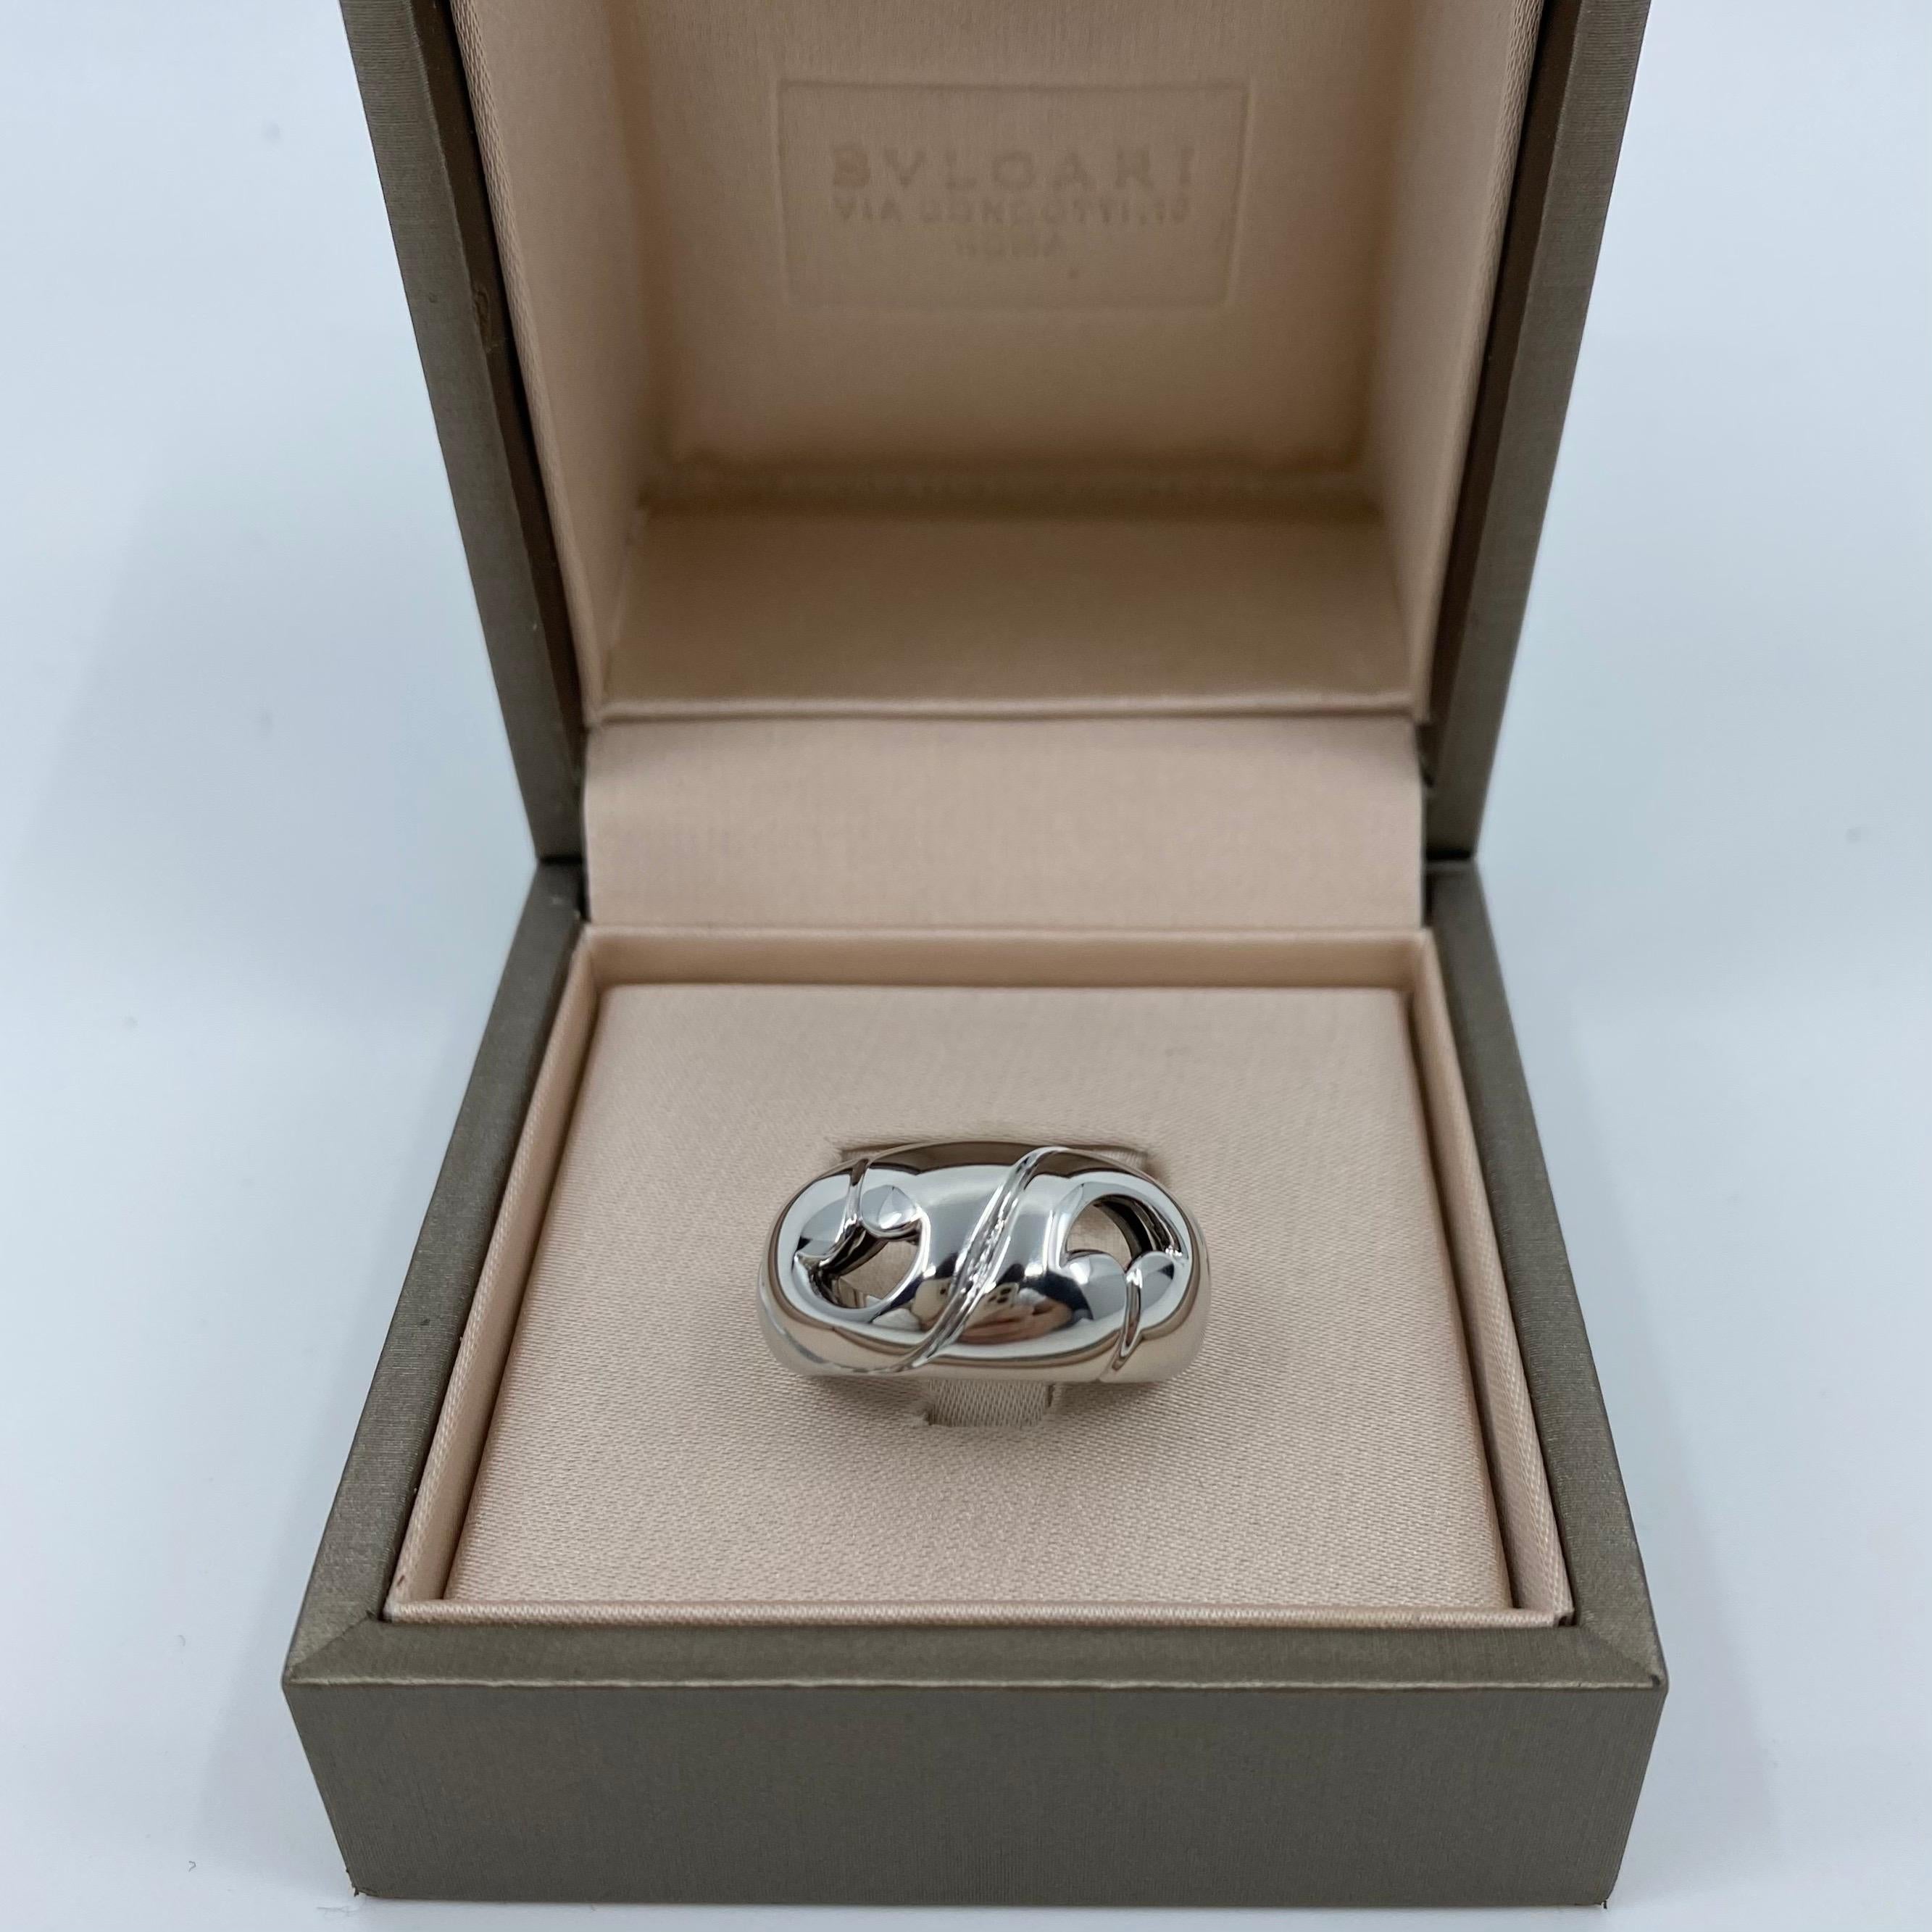 Vintage Bvlgari Bulgari Nuvole Rare 950 Platinum Dome Ring with Bvlgari Ring Box For Sale 2